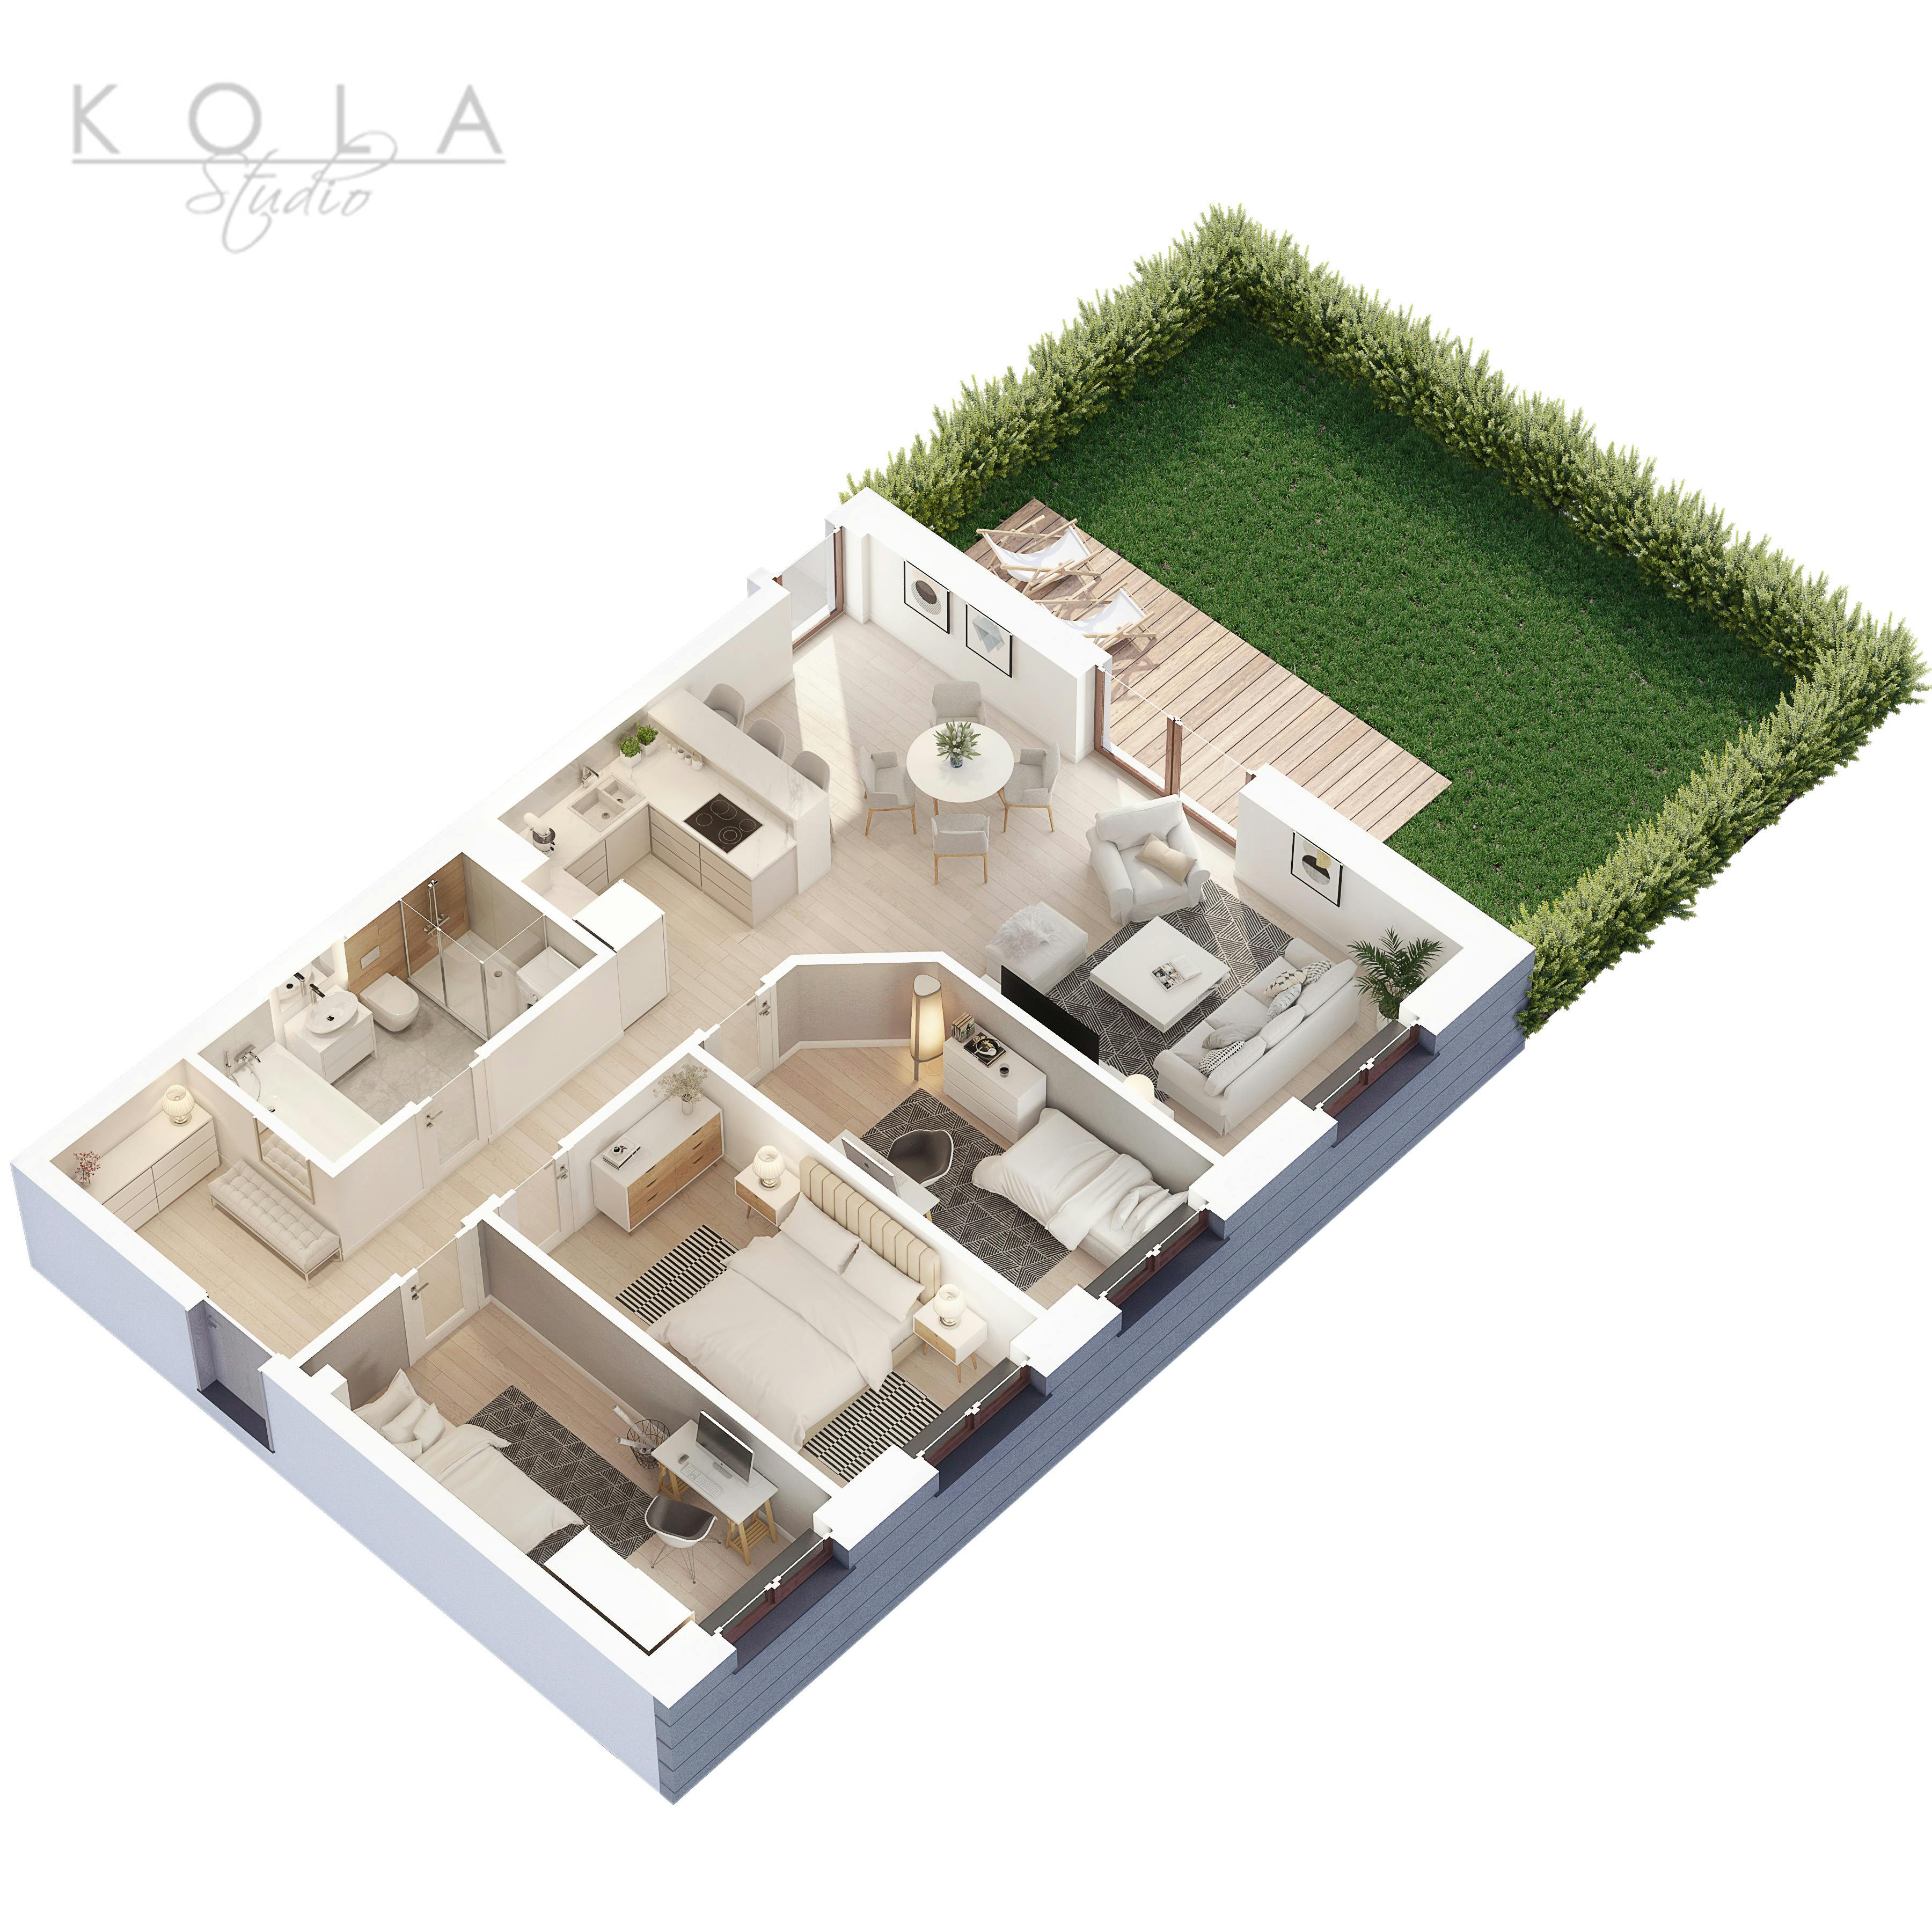 Architectural 3D floor plans KOLA Studio Architectural